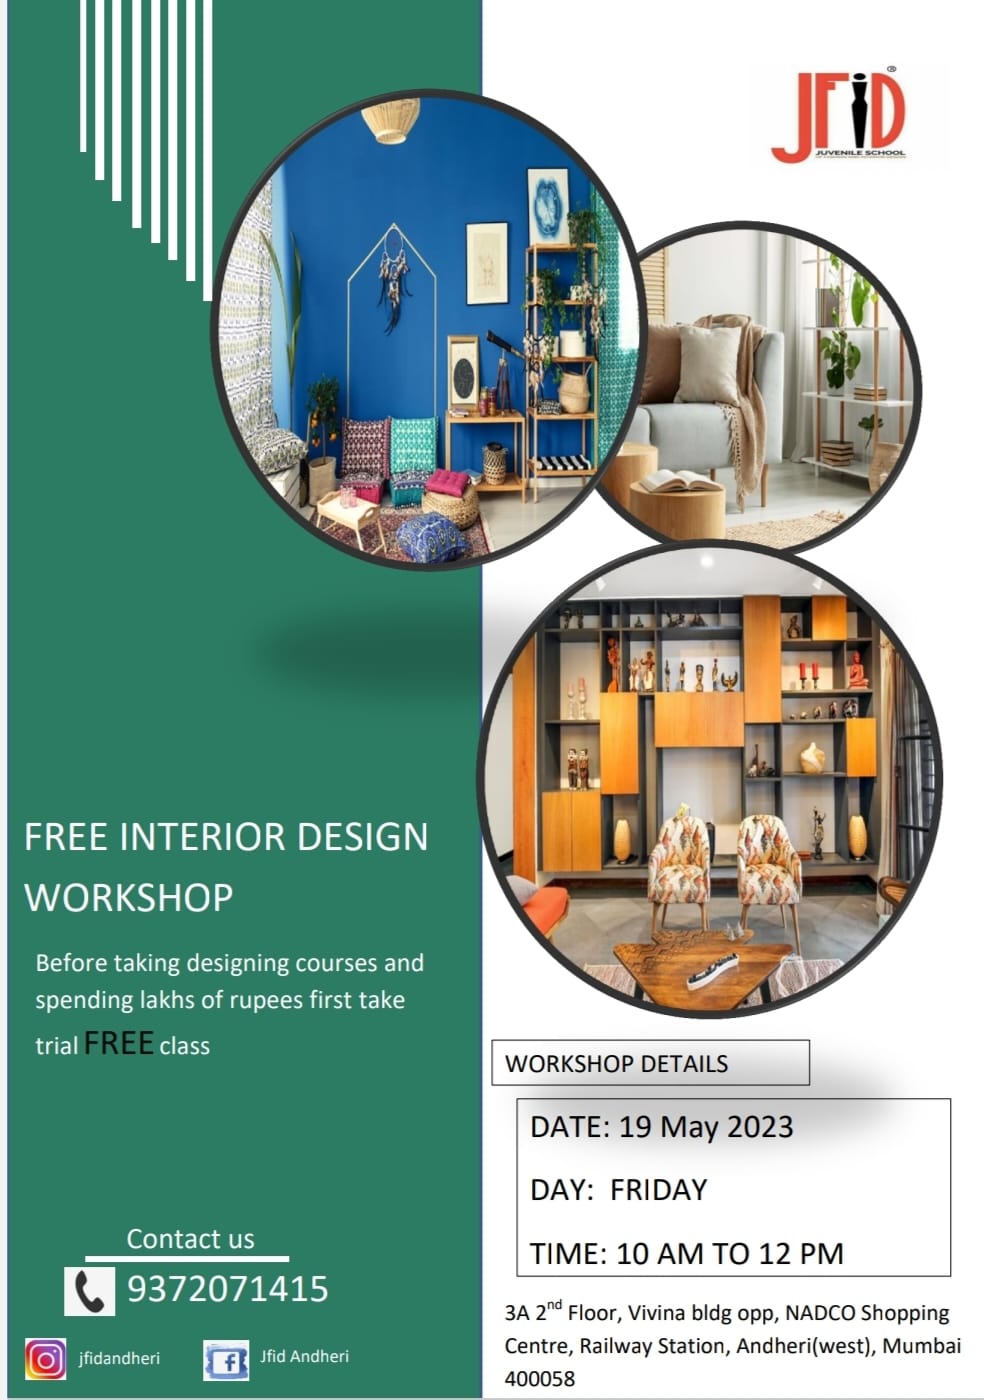 Interior Designing Courses College in Chandigarh India  IIFD